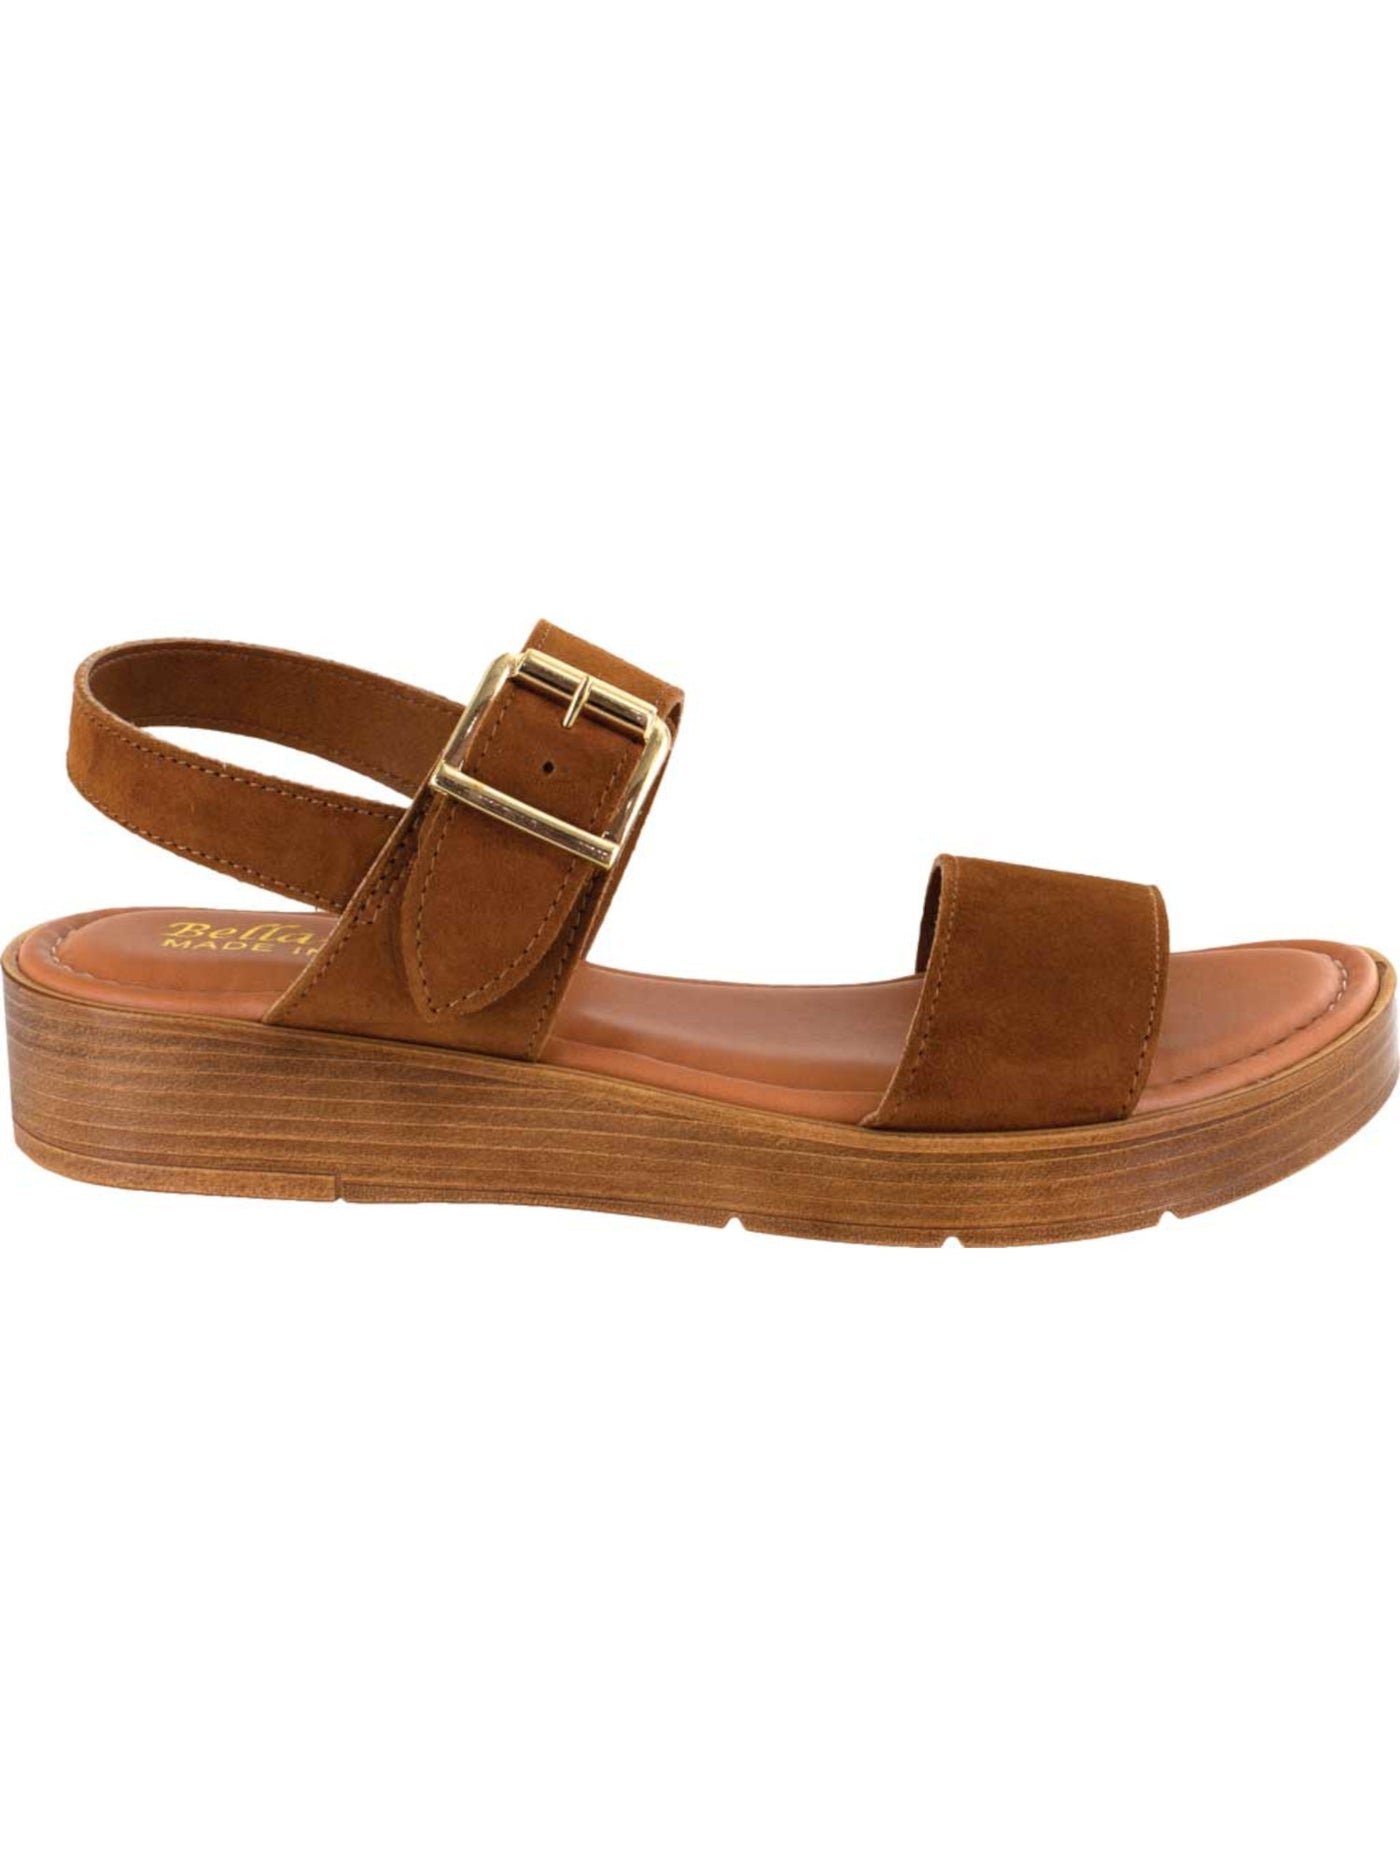 BELLA VITA Womens Brown 1/2" Platform Adjustable Padded Comfort Tay-italy Round Toe Wedge Buckle Leather Slingback Sandal 12 W